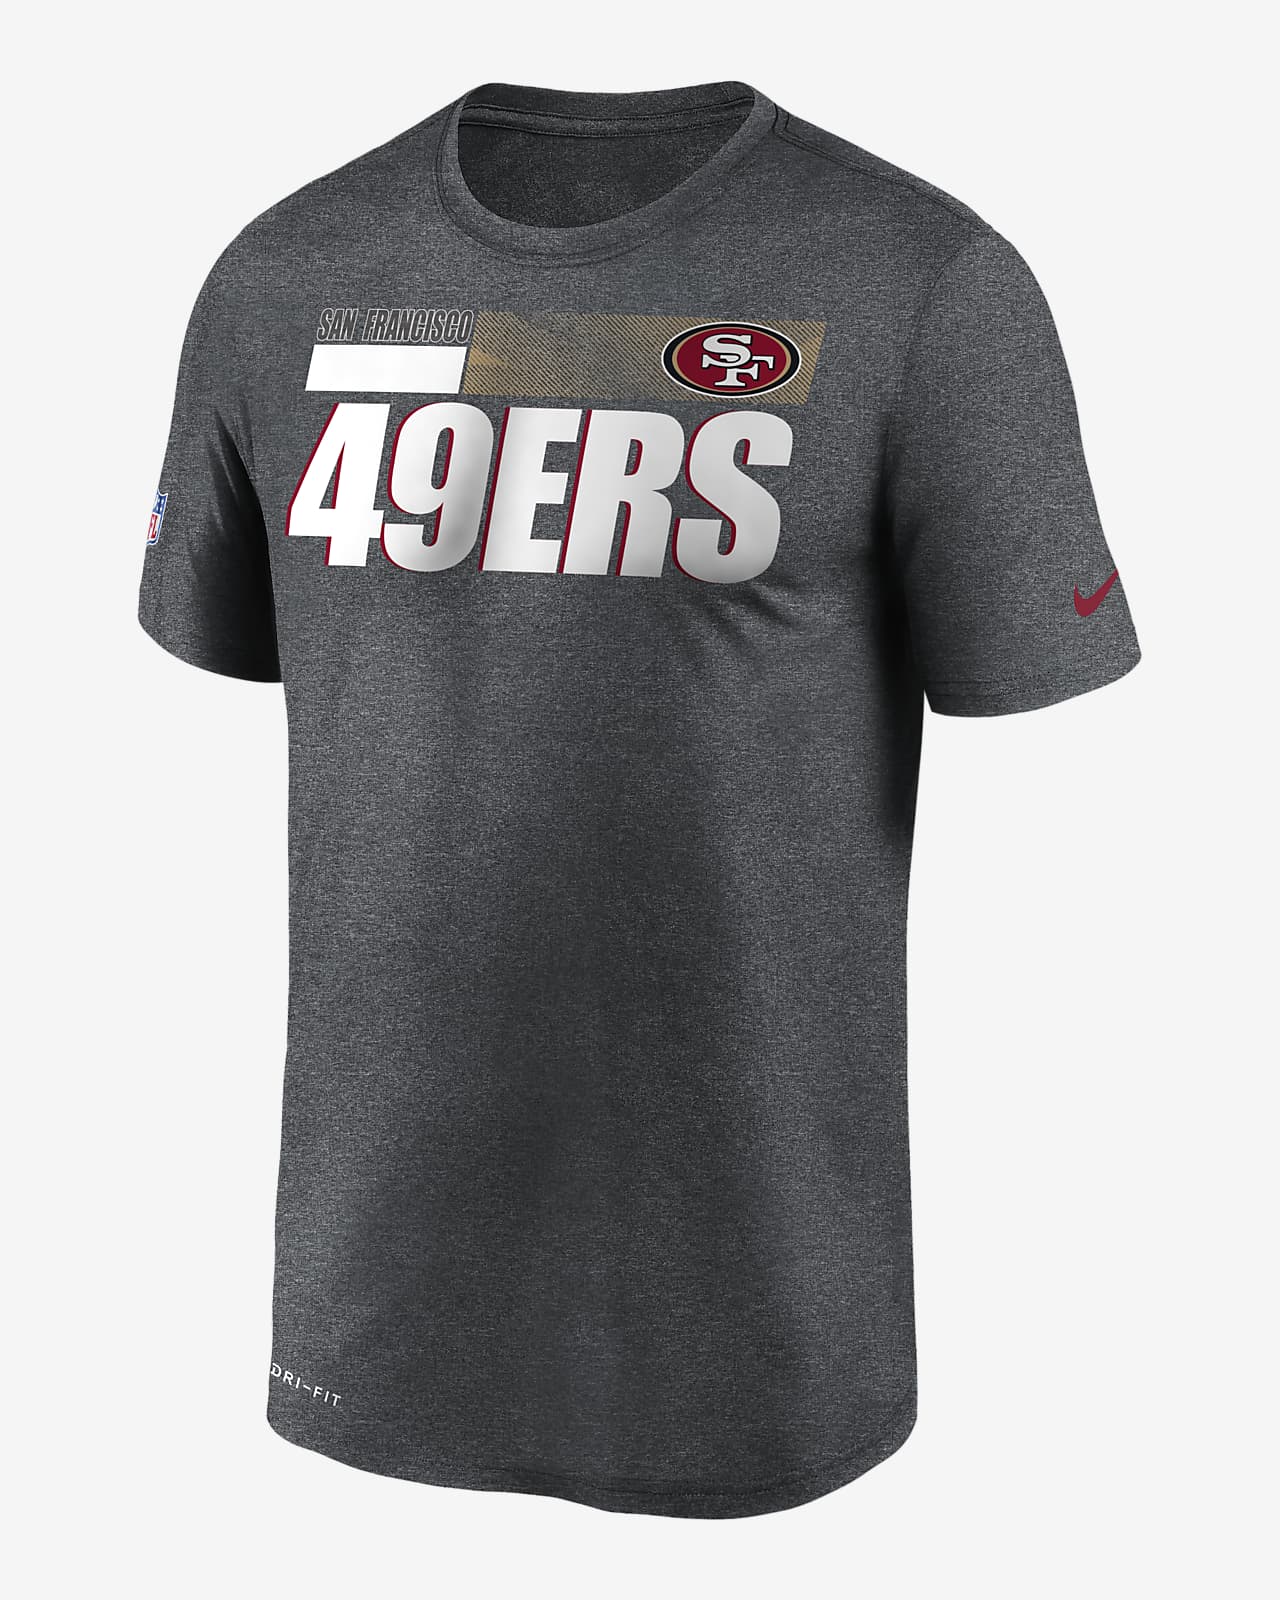 men's nike black san francisco 49ers sideline team logo performance pullover hoodie